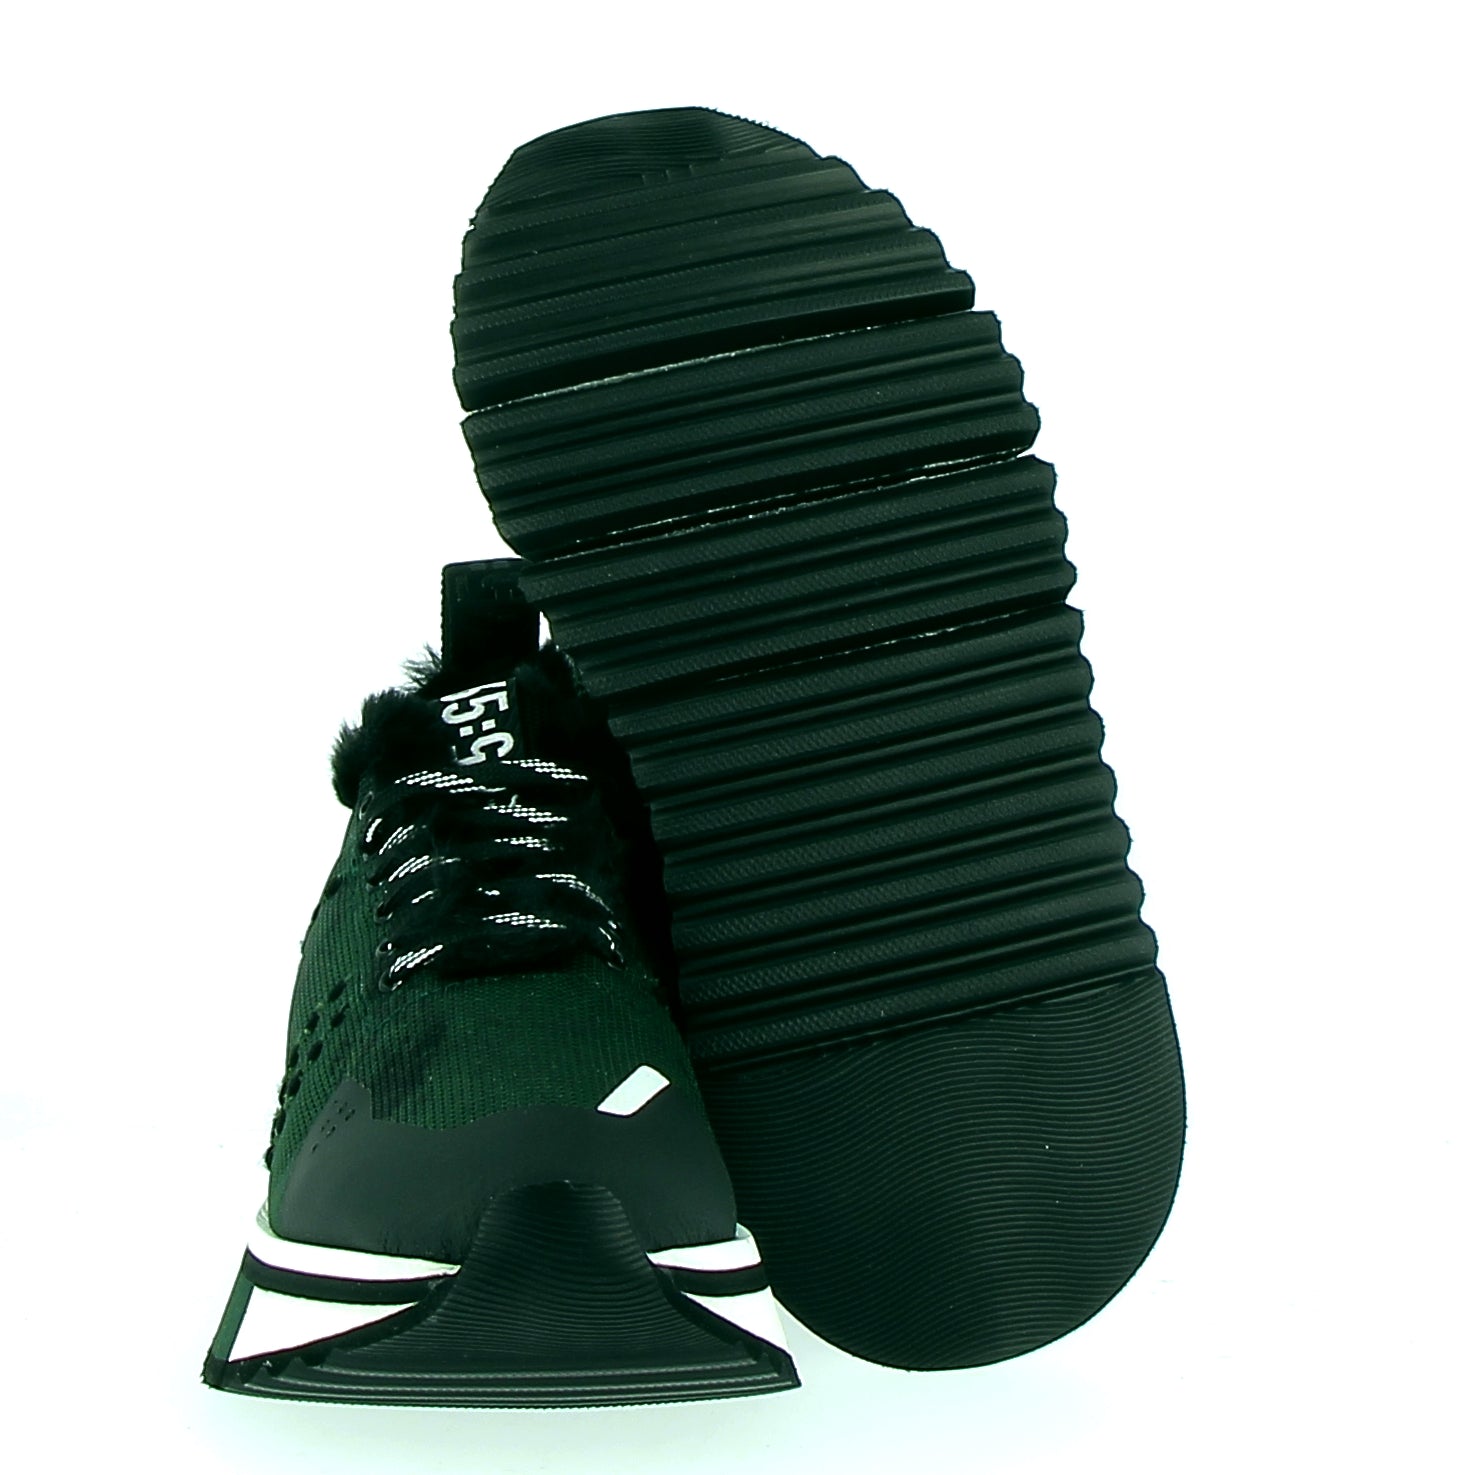 Dark green camouflage sneaker with fur